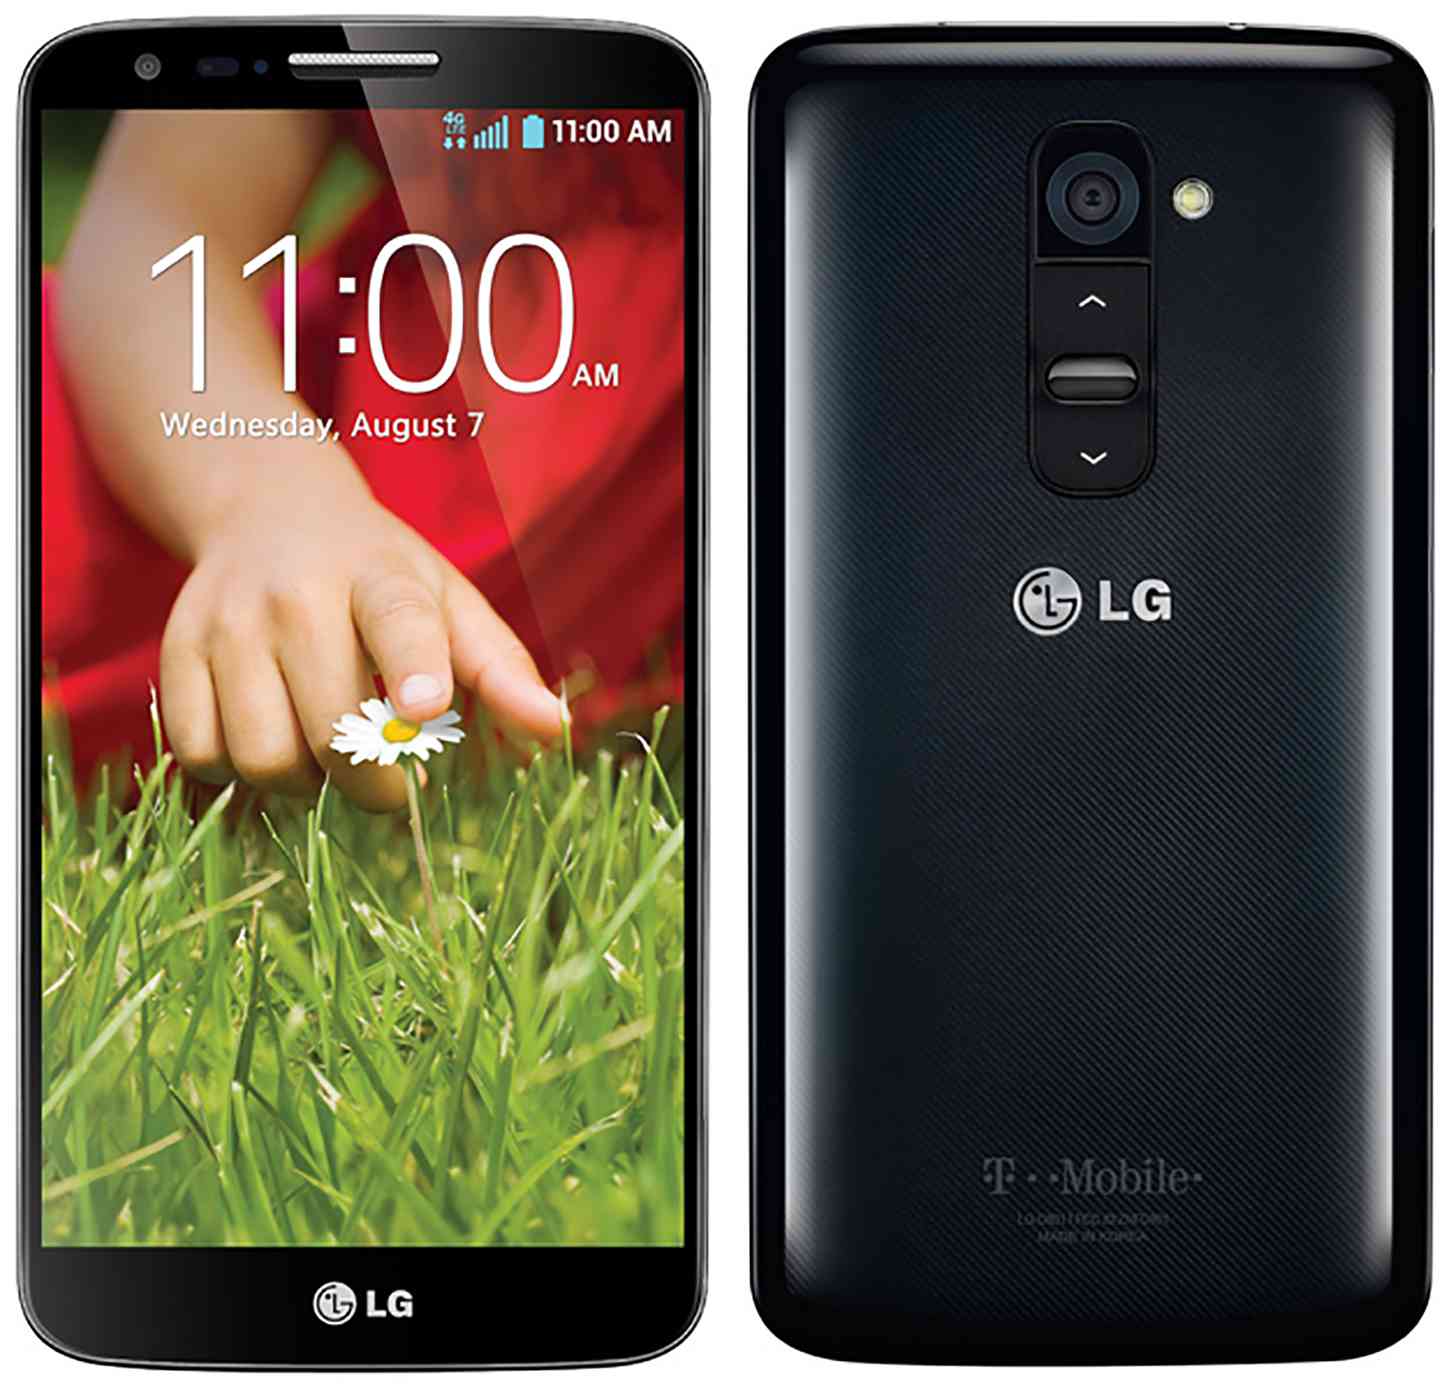 T-Mobile LG G2 large